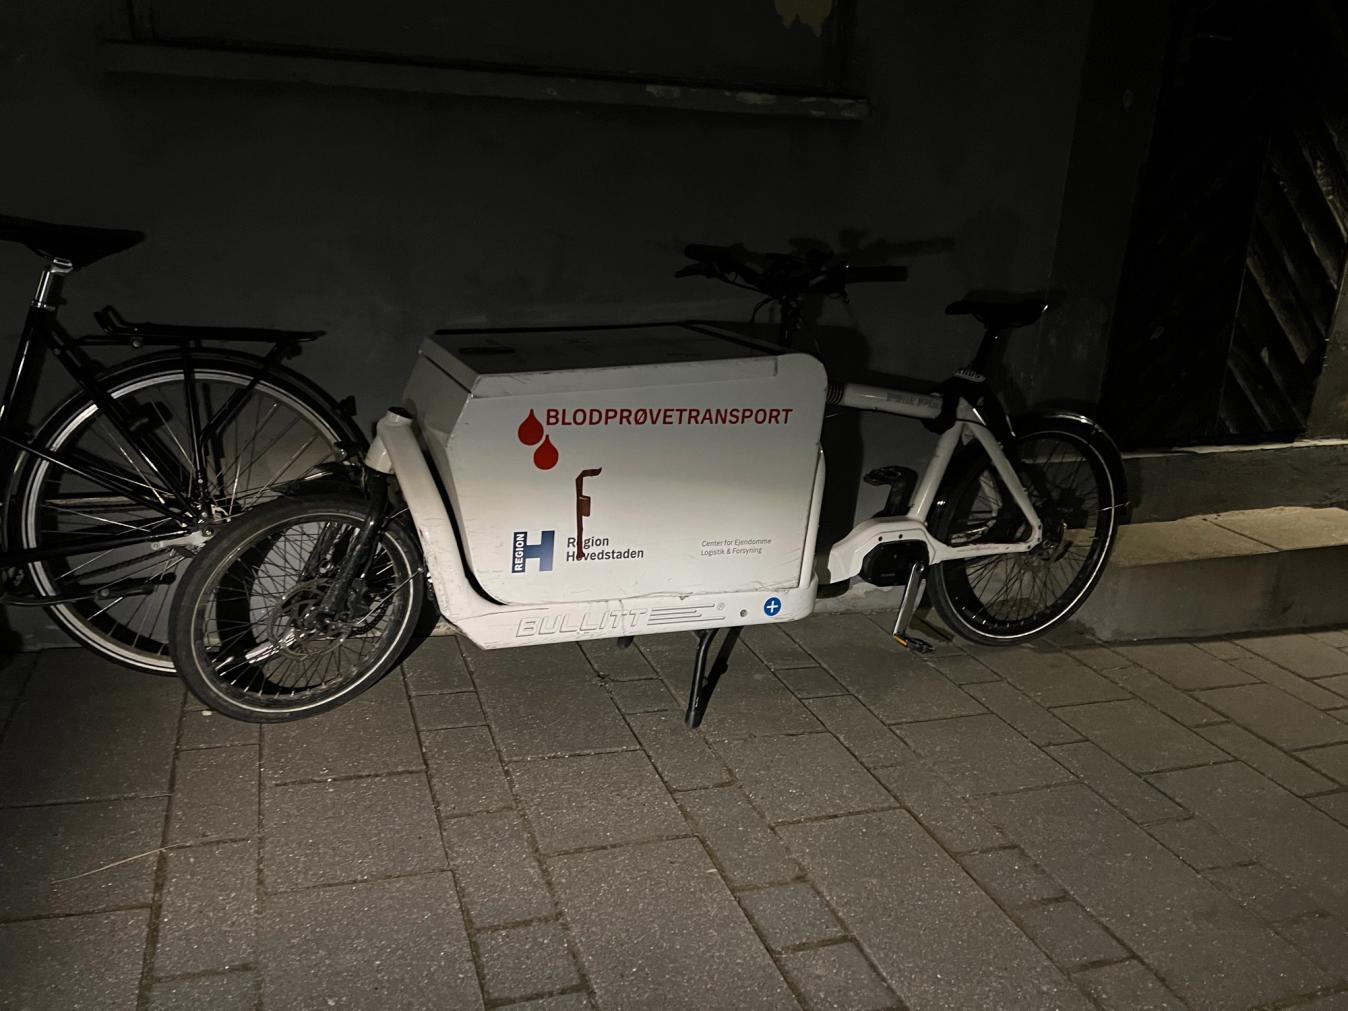 Cargo bike in Denmark used for transporting blood